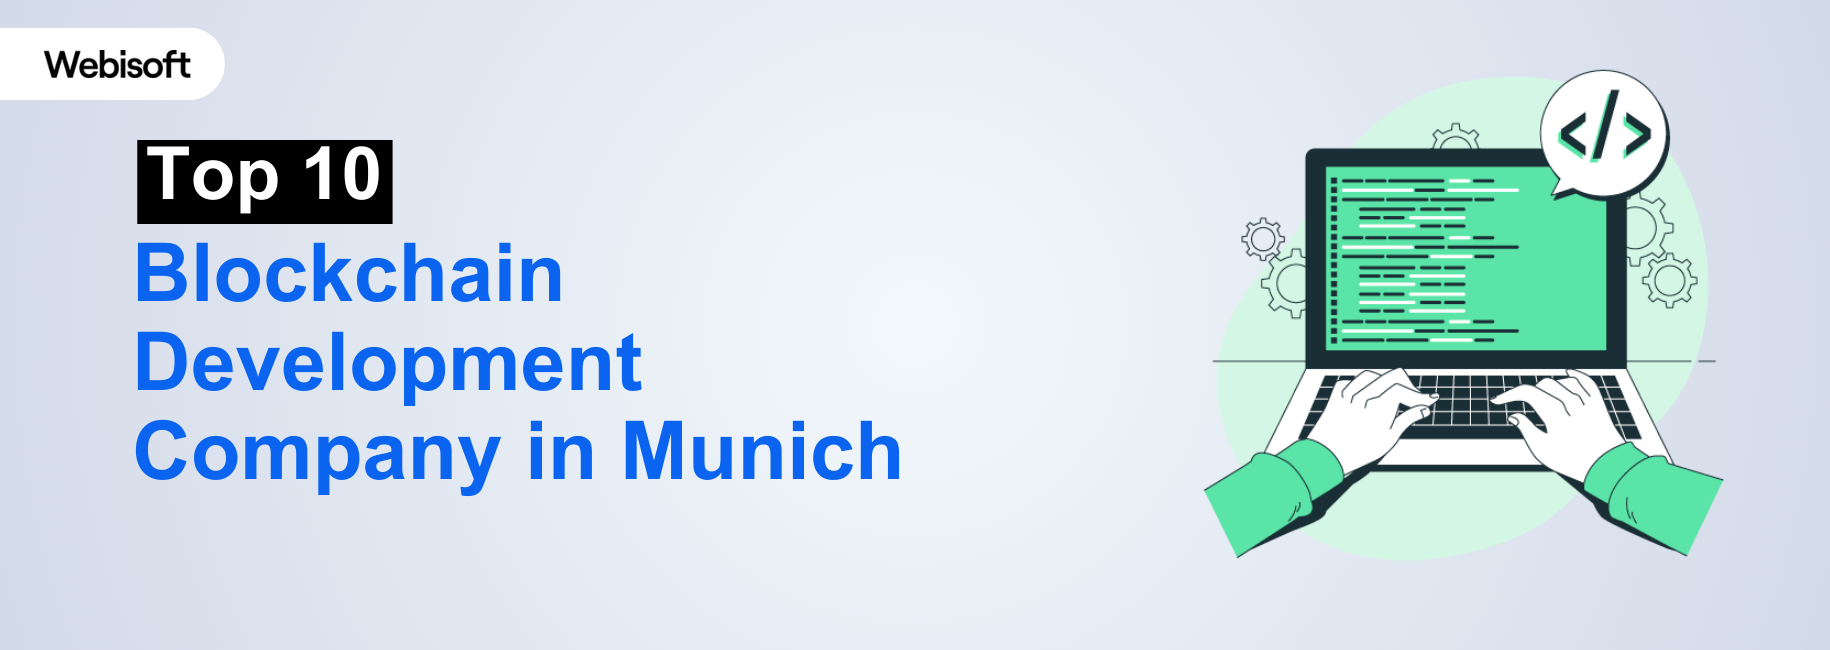 Top 10 Blockchain Development Company in Munich for Innovative Solutions